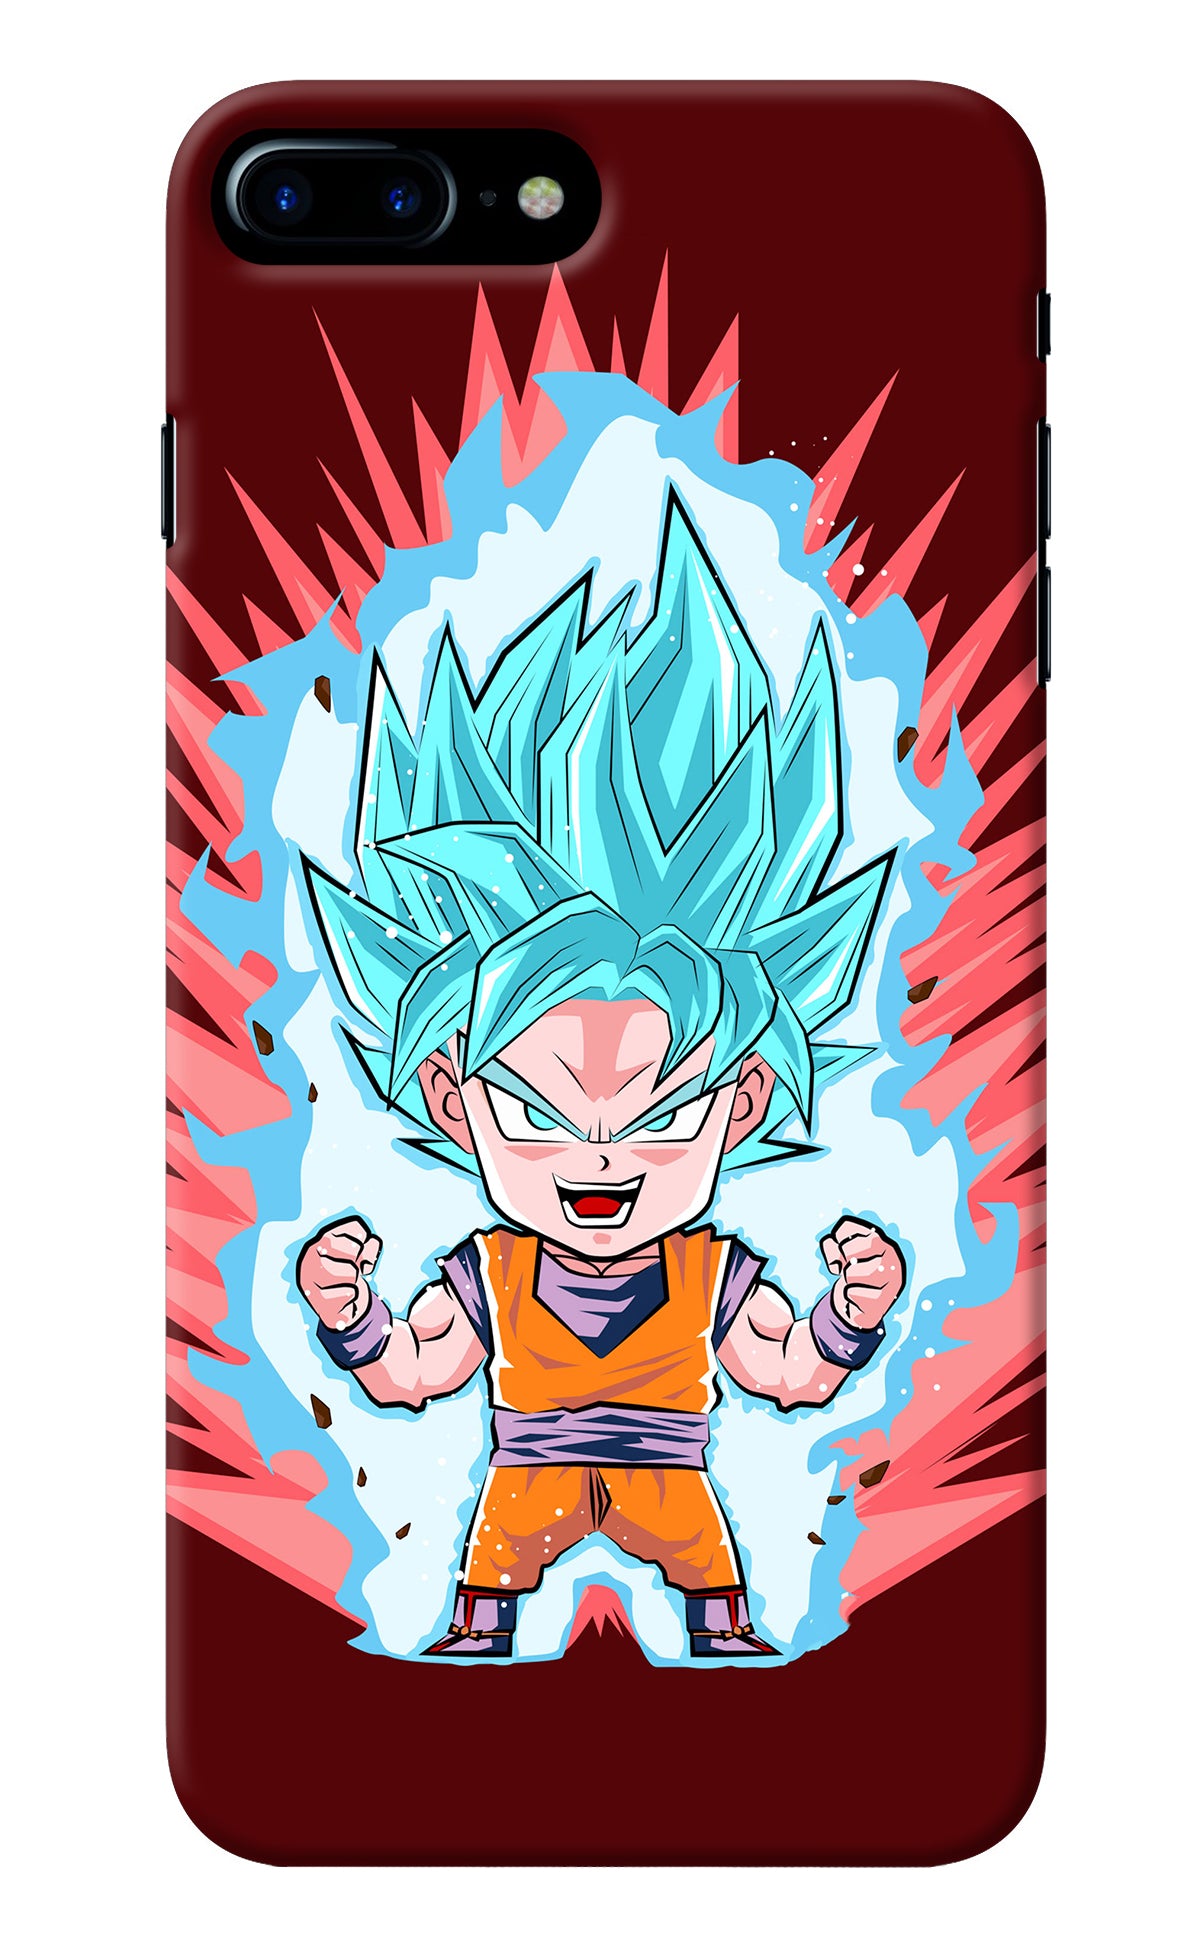 Goku Little iPhone 7 Plus Back Cover